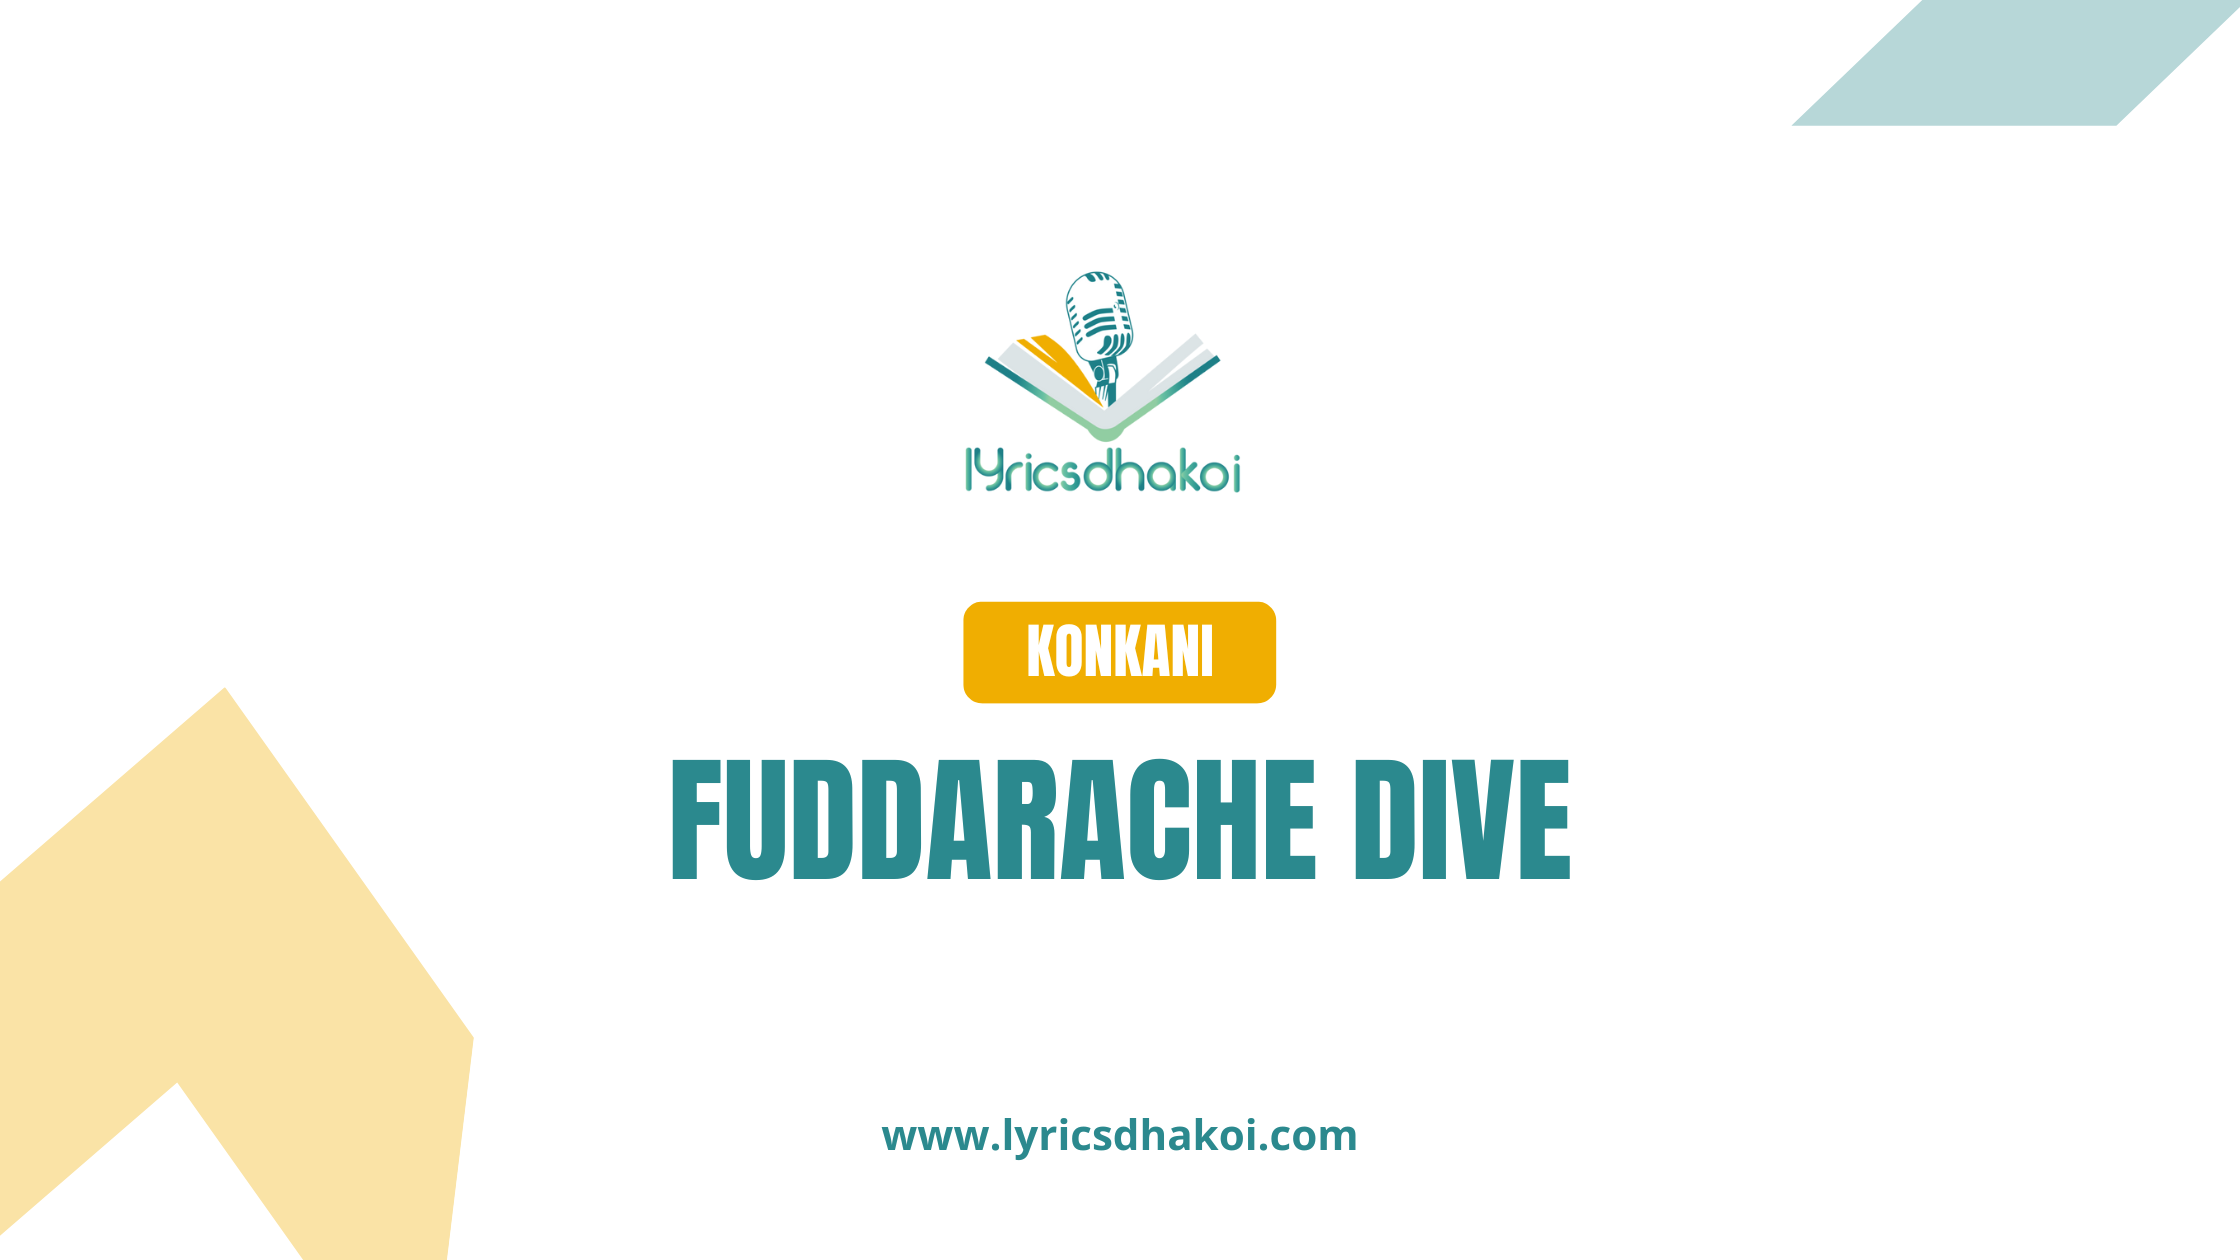 Fuddarache Dive Konkani Lyrics for Karaoke Online - LyricsDhakoi.com